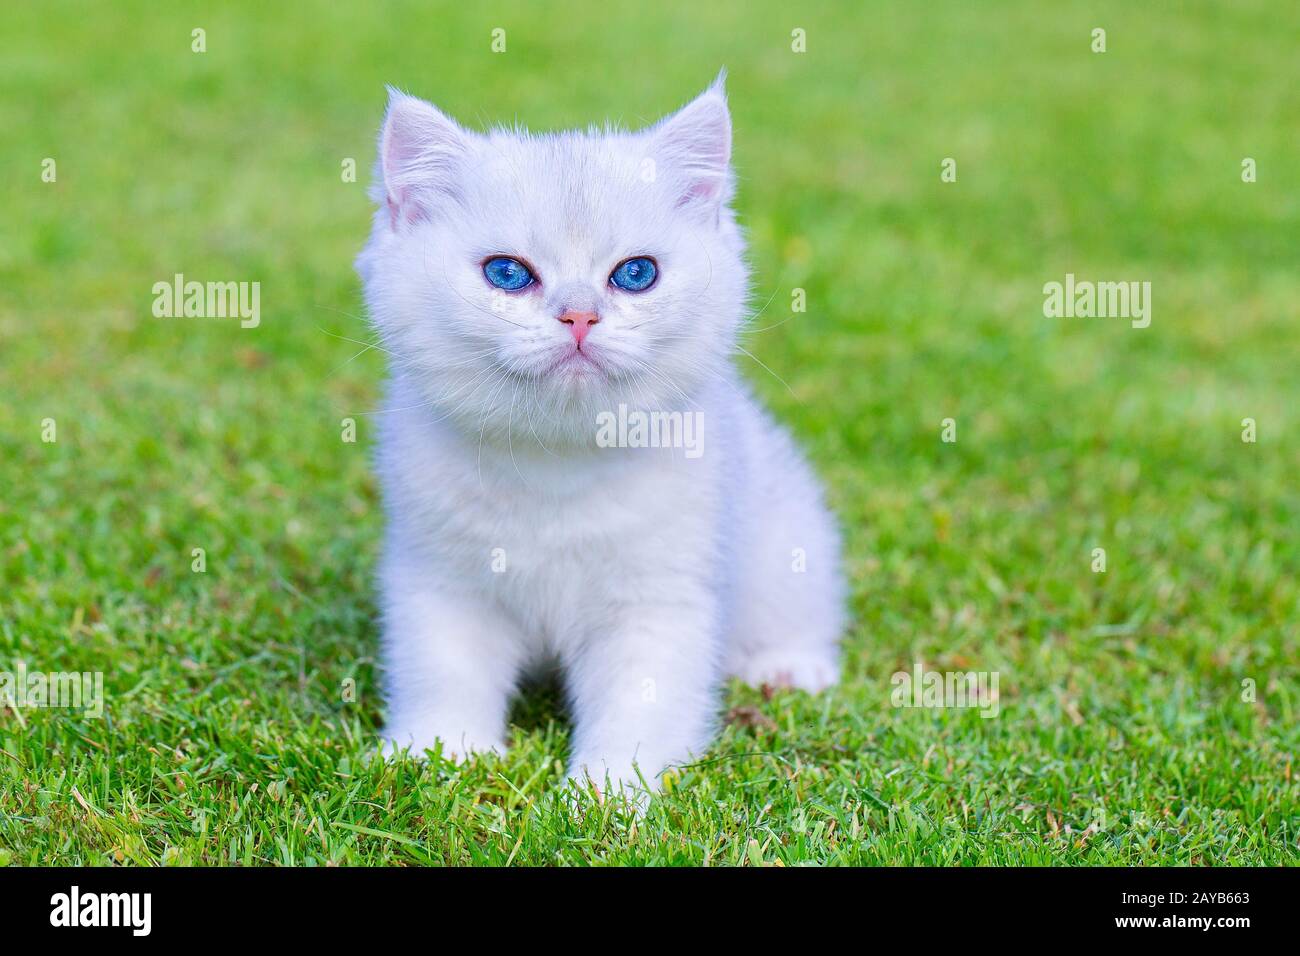 One white kitten sitting on green grass Stock Photo